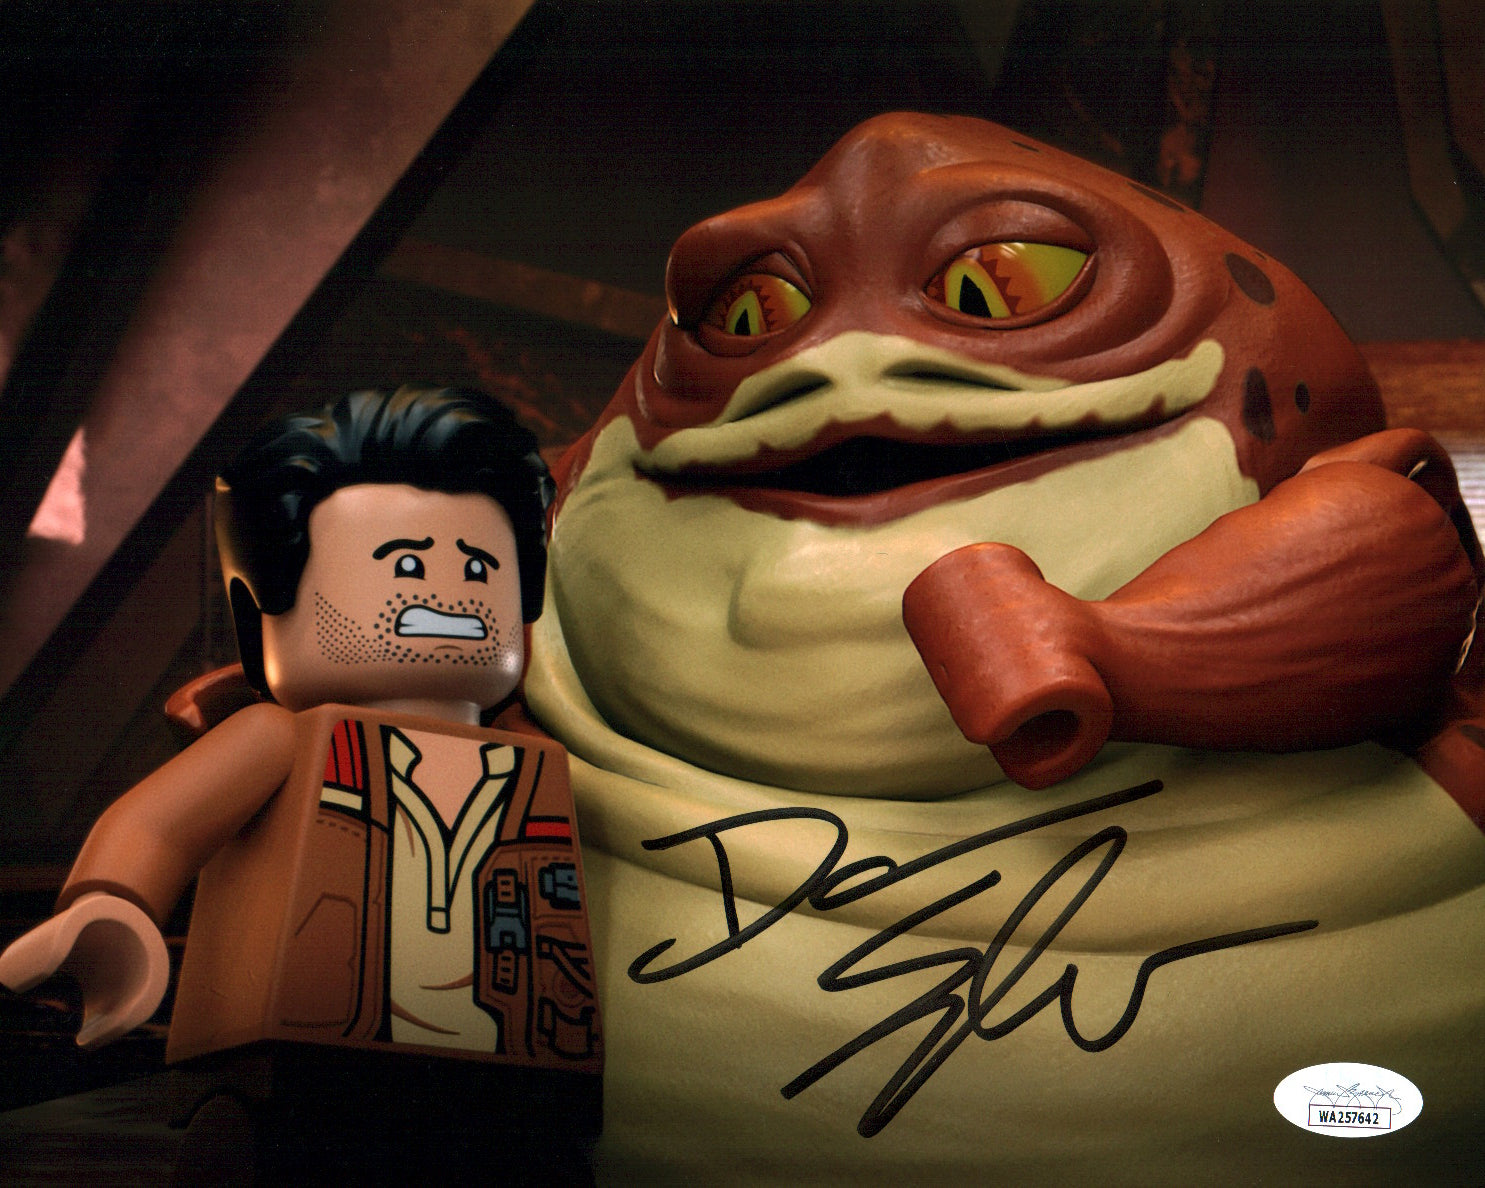 Dana Snyder LEGO Star Wars 8x10 Signed Photo JSA COA Certified Autograph